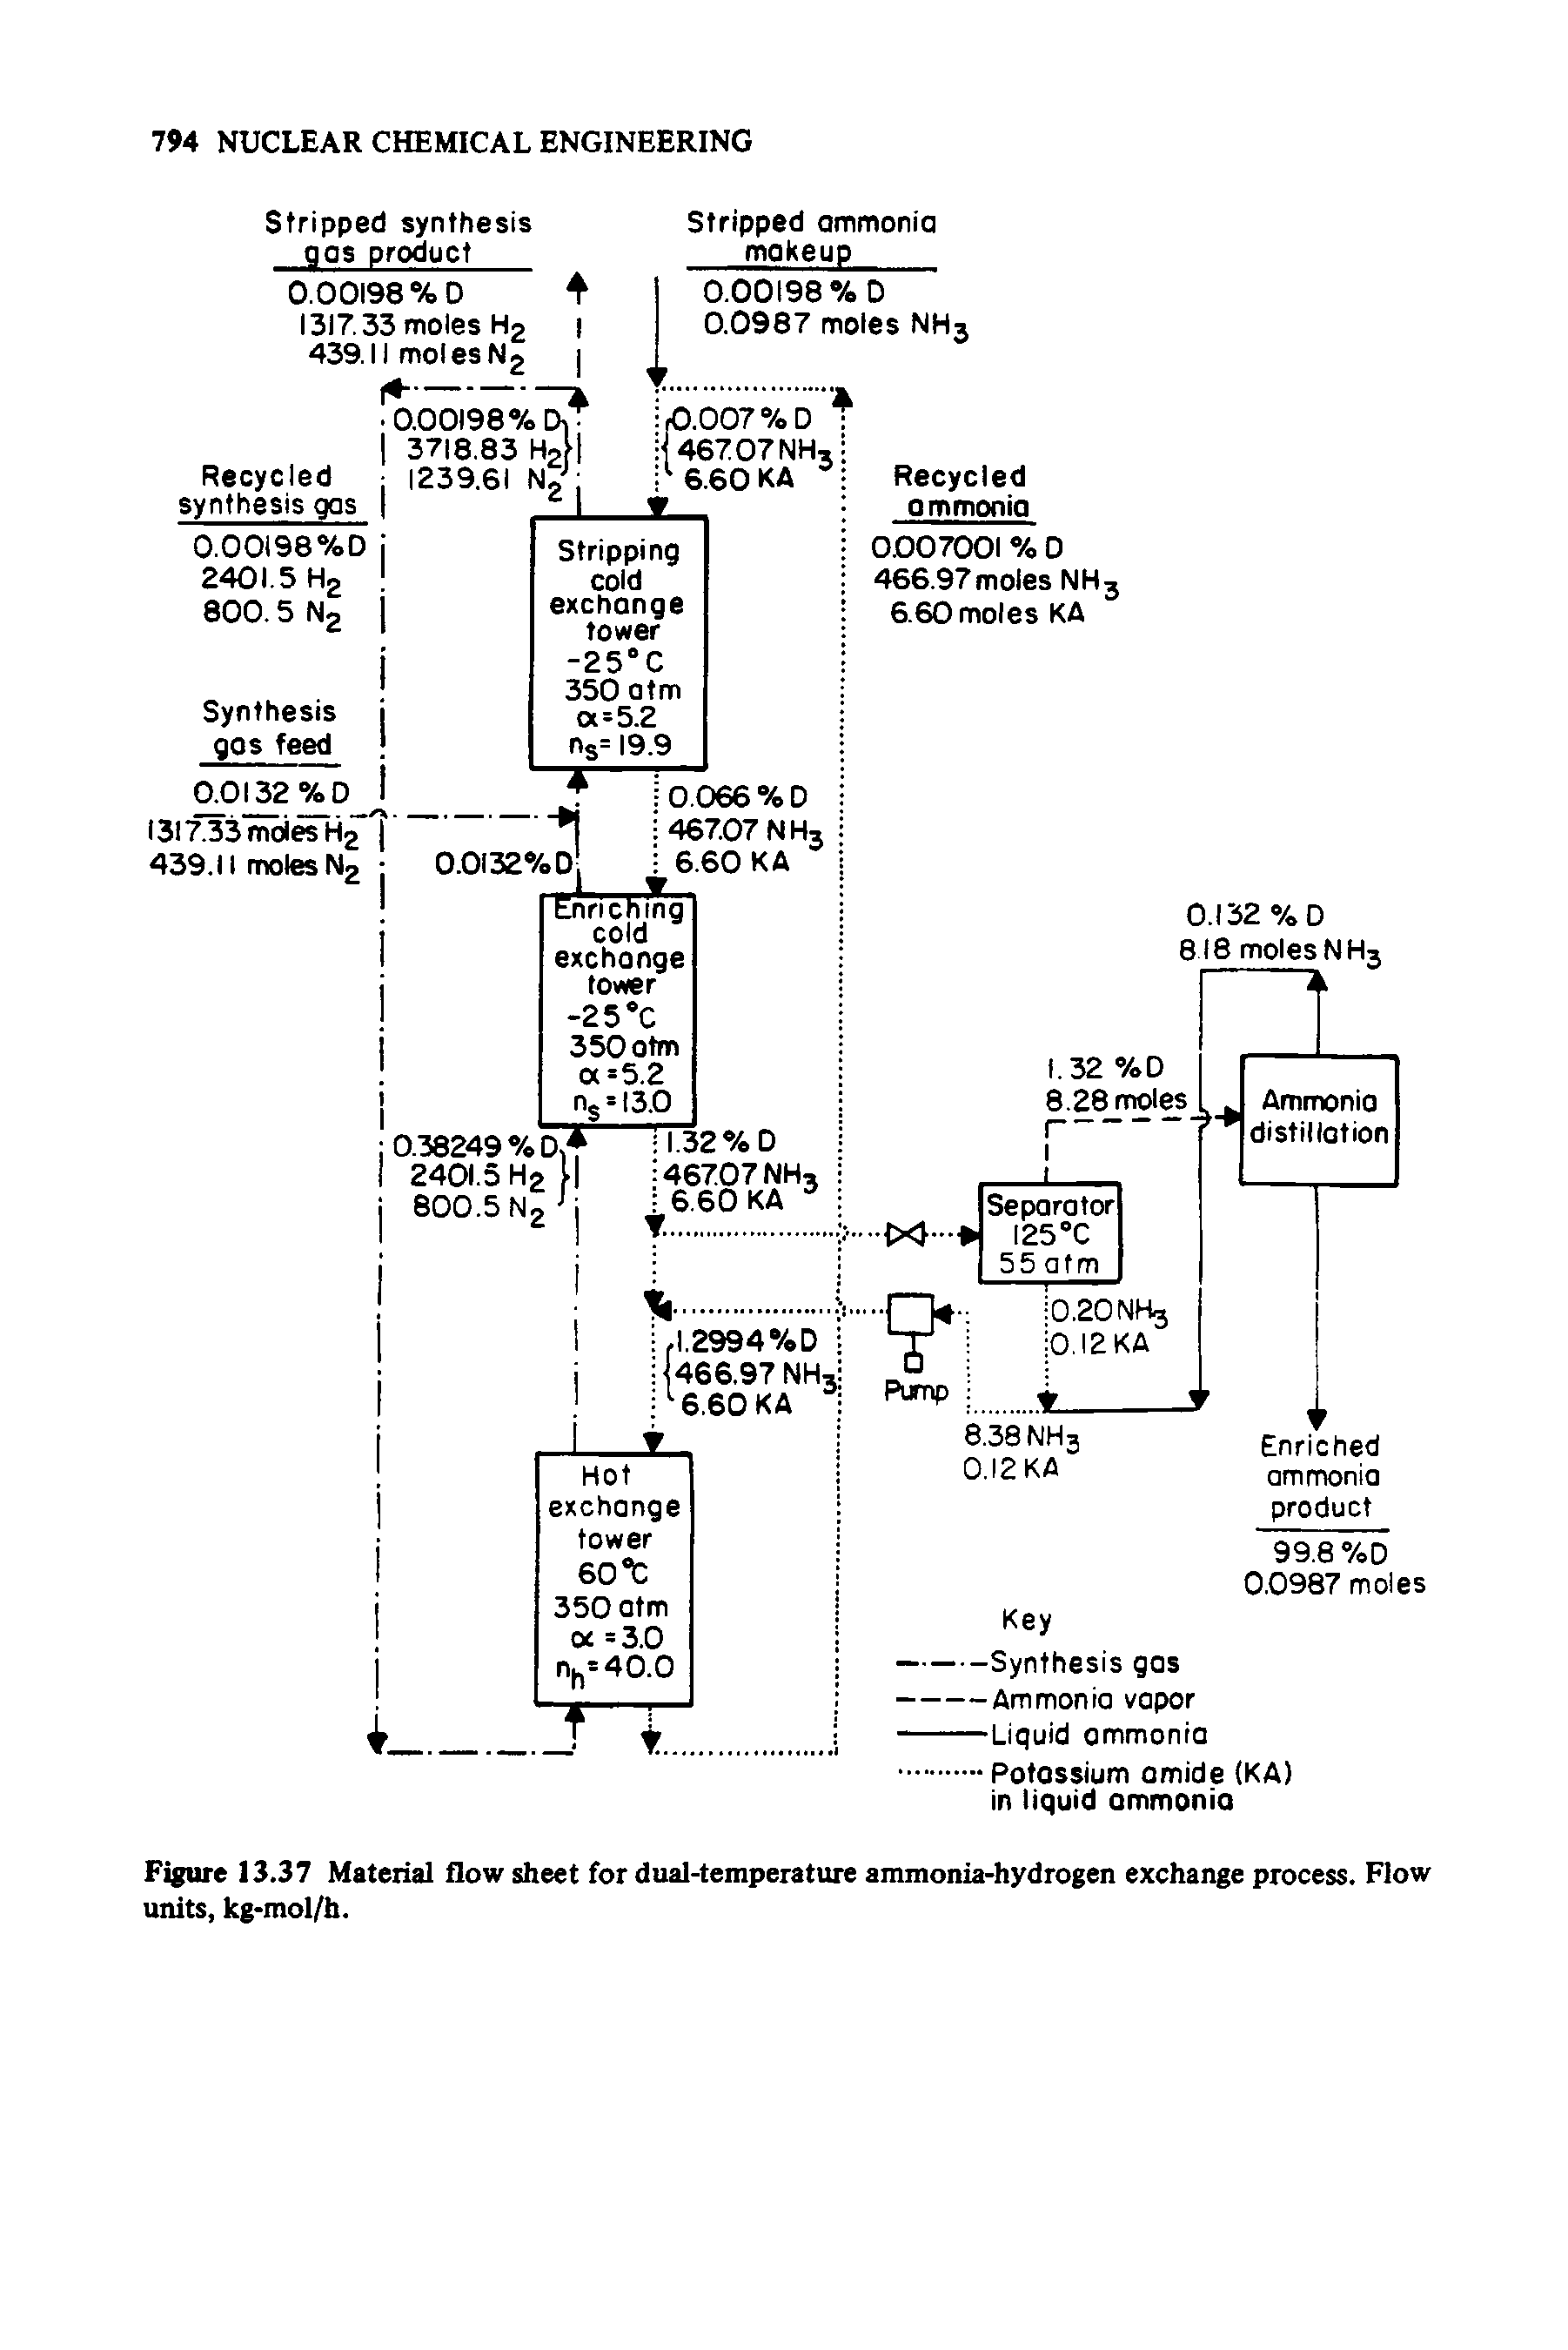 Figure 13.37 Material flow sheet for dual-temperature ammonia-hydrogen exchange process. Flow units, kg-mol/h.